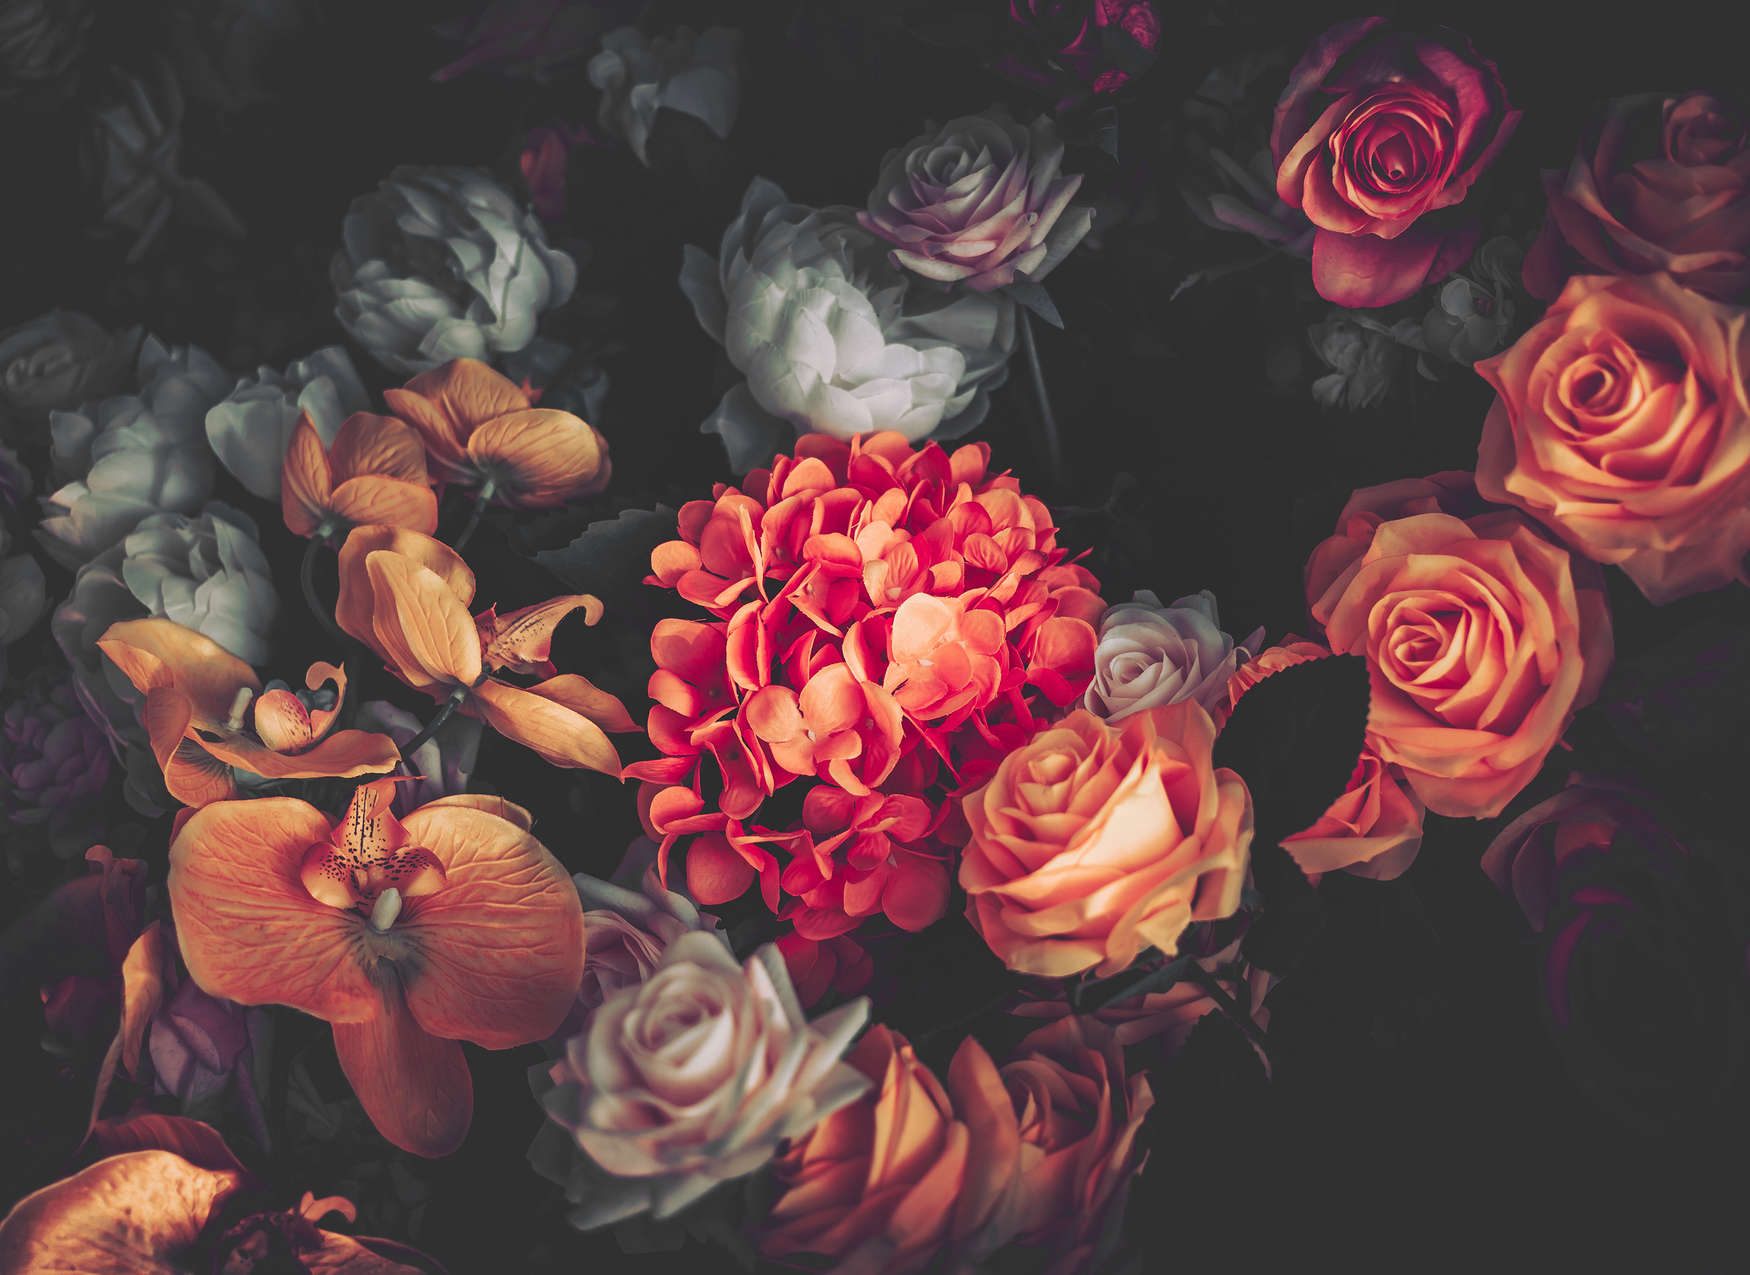             Bouquet of Flowers Wallpaper - Red, Orange, Pink
        